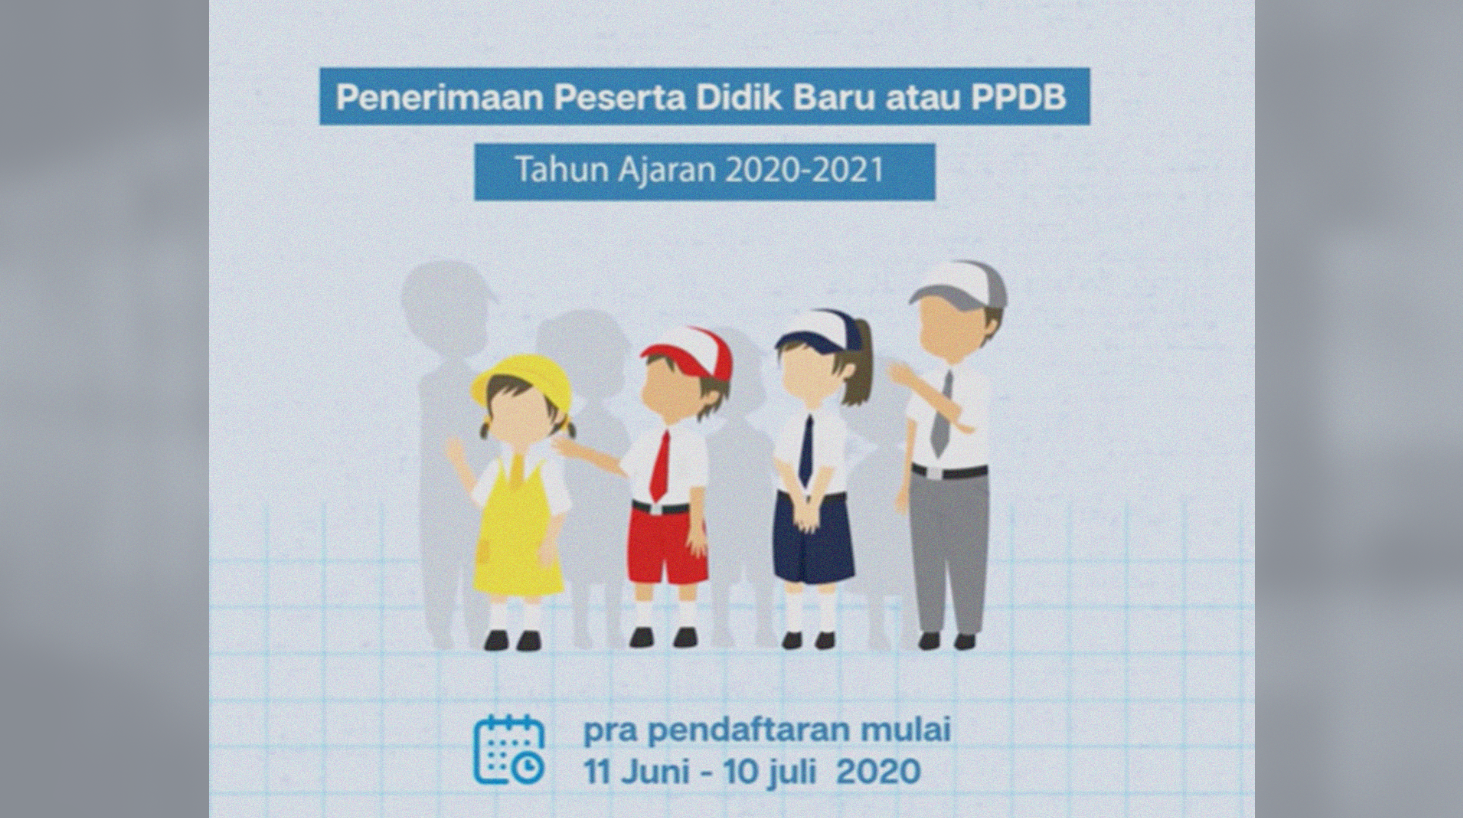 Penerimaan Peserta Didik Baru atau PPDB DKI Jakarta. (Grafis: ppdb.jakarta.go.id)